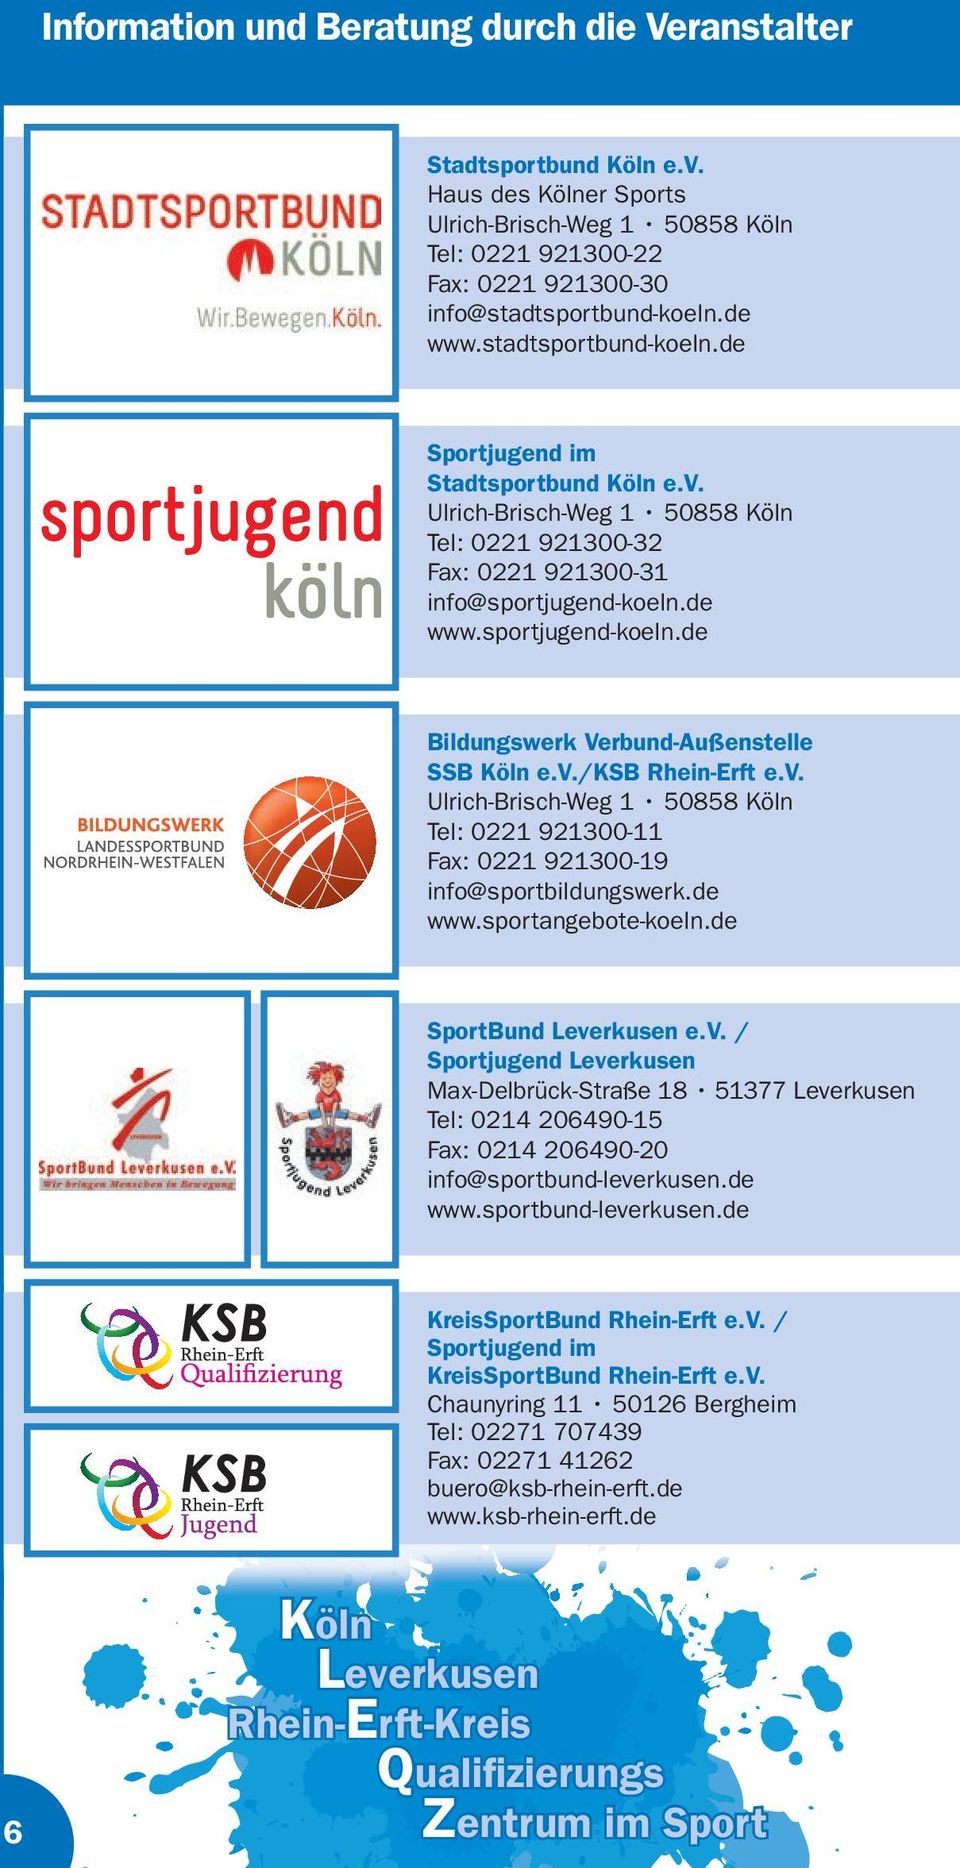 de www.sportjugend-koeln.de Bildungswerk Verbund-Außenstelle SSB Köln e.v./ksb Rhein-Erft e.v. Ulrich-Brisch-Weg 1 50858 Köln Tel: 0221 921300-11 Fax: 0221 921300-19 info@sportbildungswerk.de www.sportangebote-koeln.